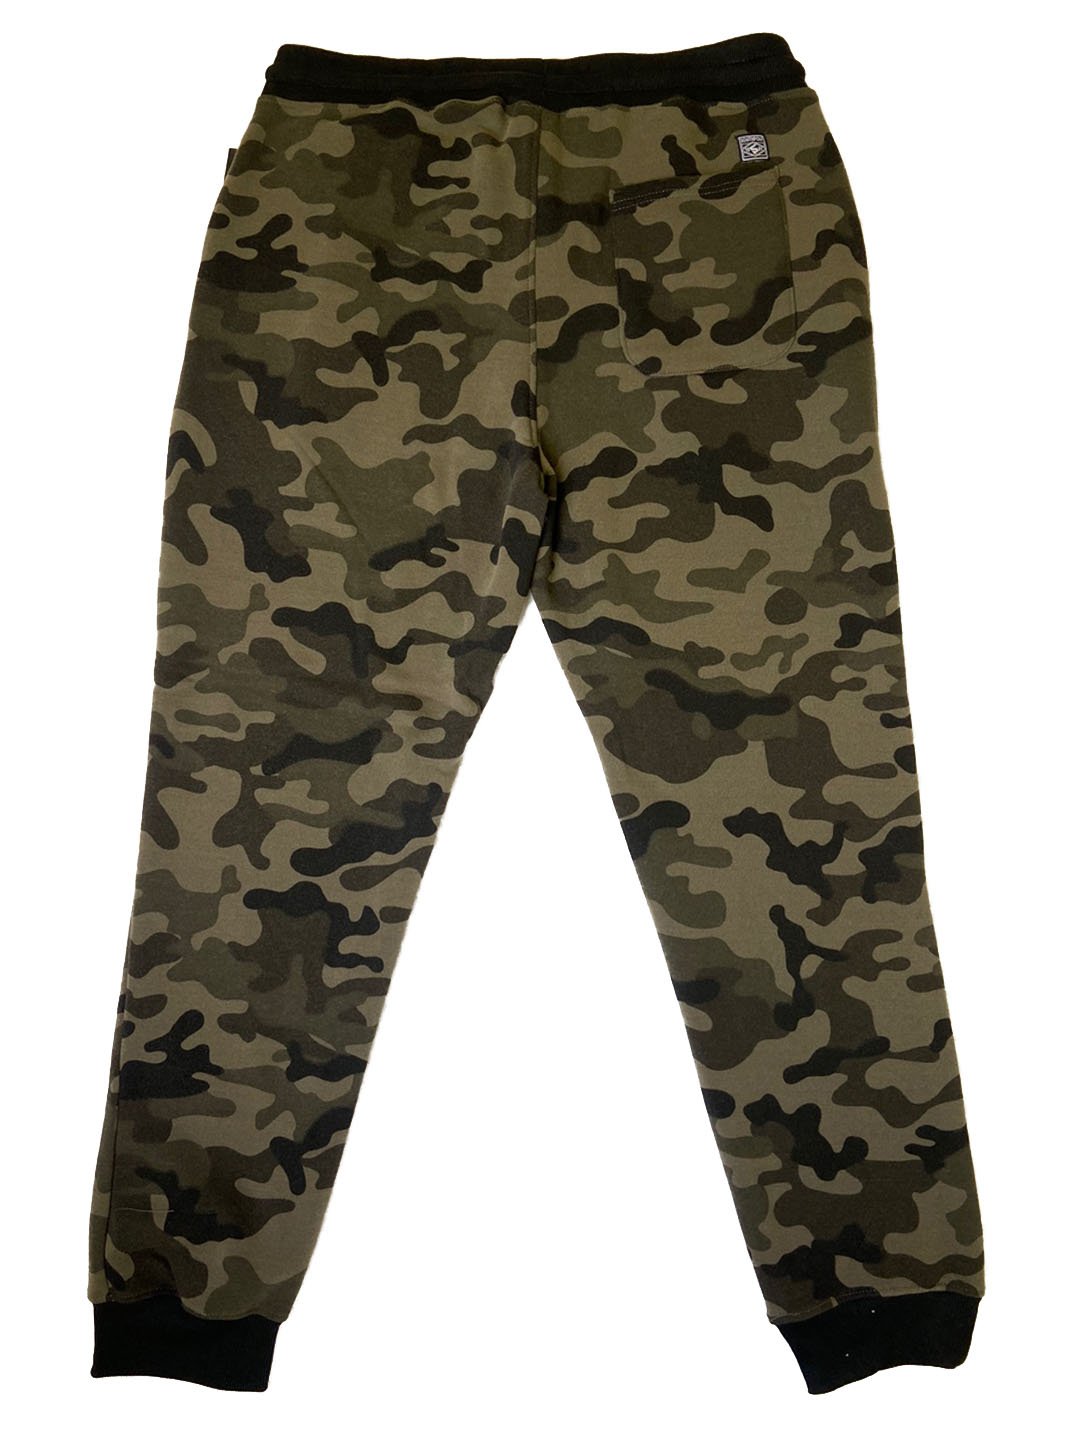 SOUTHPOLE Camouflage Jogger Pants